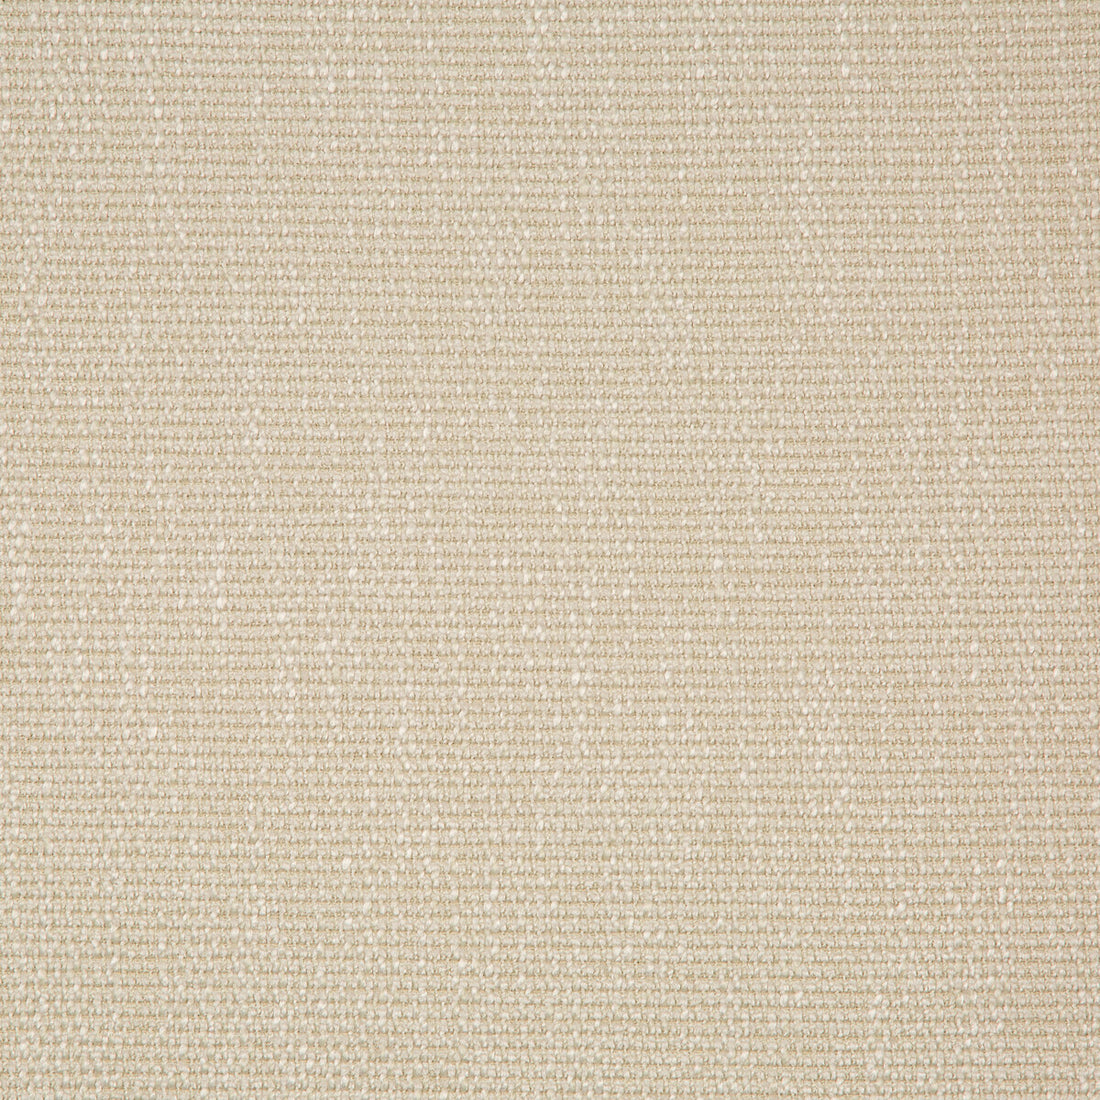 Kravet Smart fabric in 35943-116 color - pattern 35943.116.0 - by Kravet Smart in the Performance Kravetarmor collection